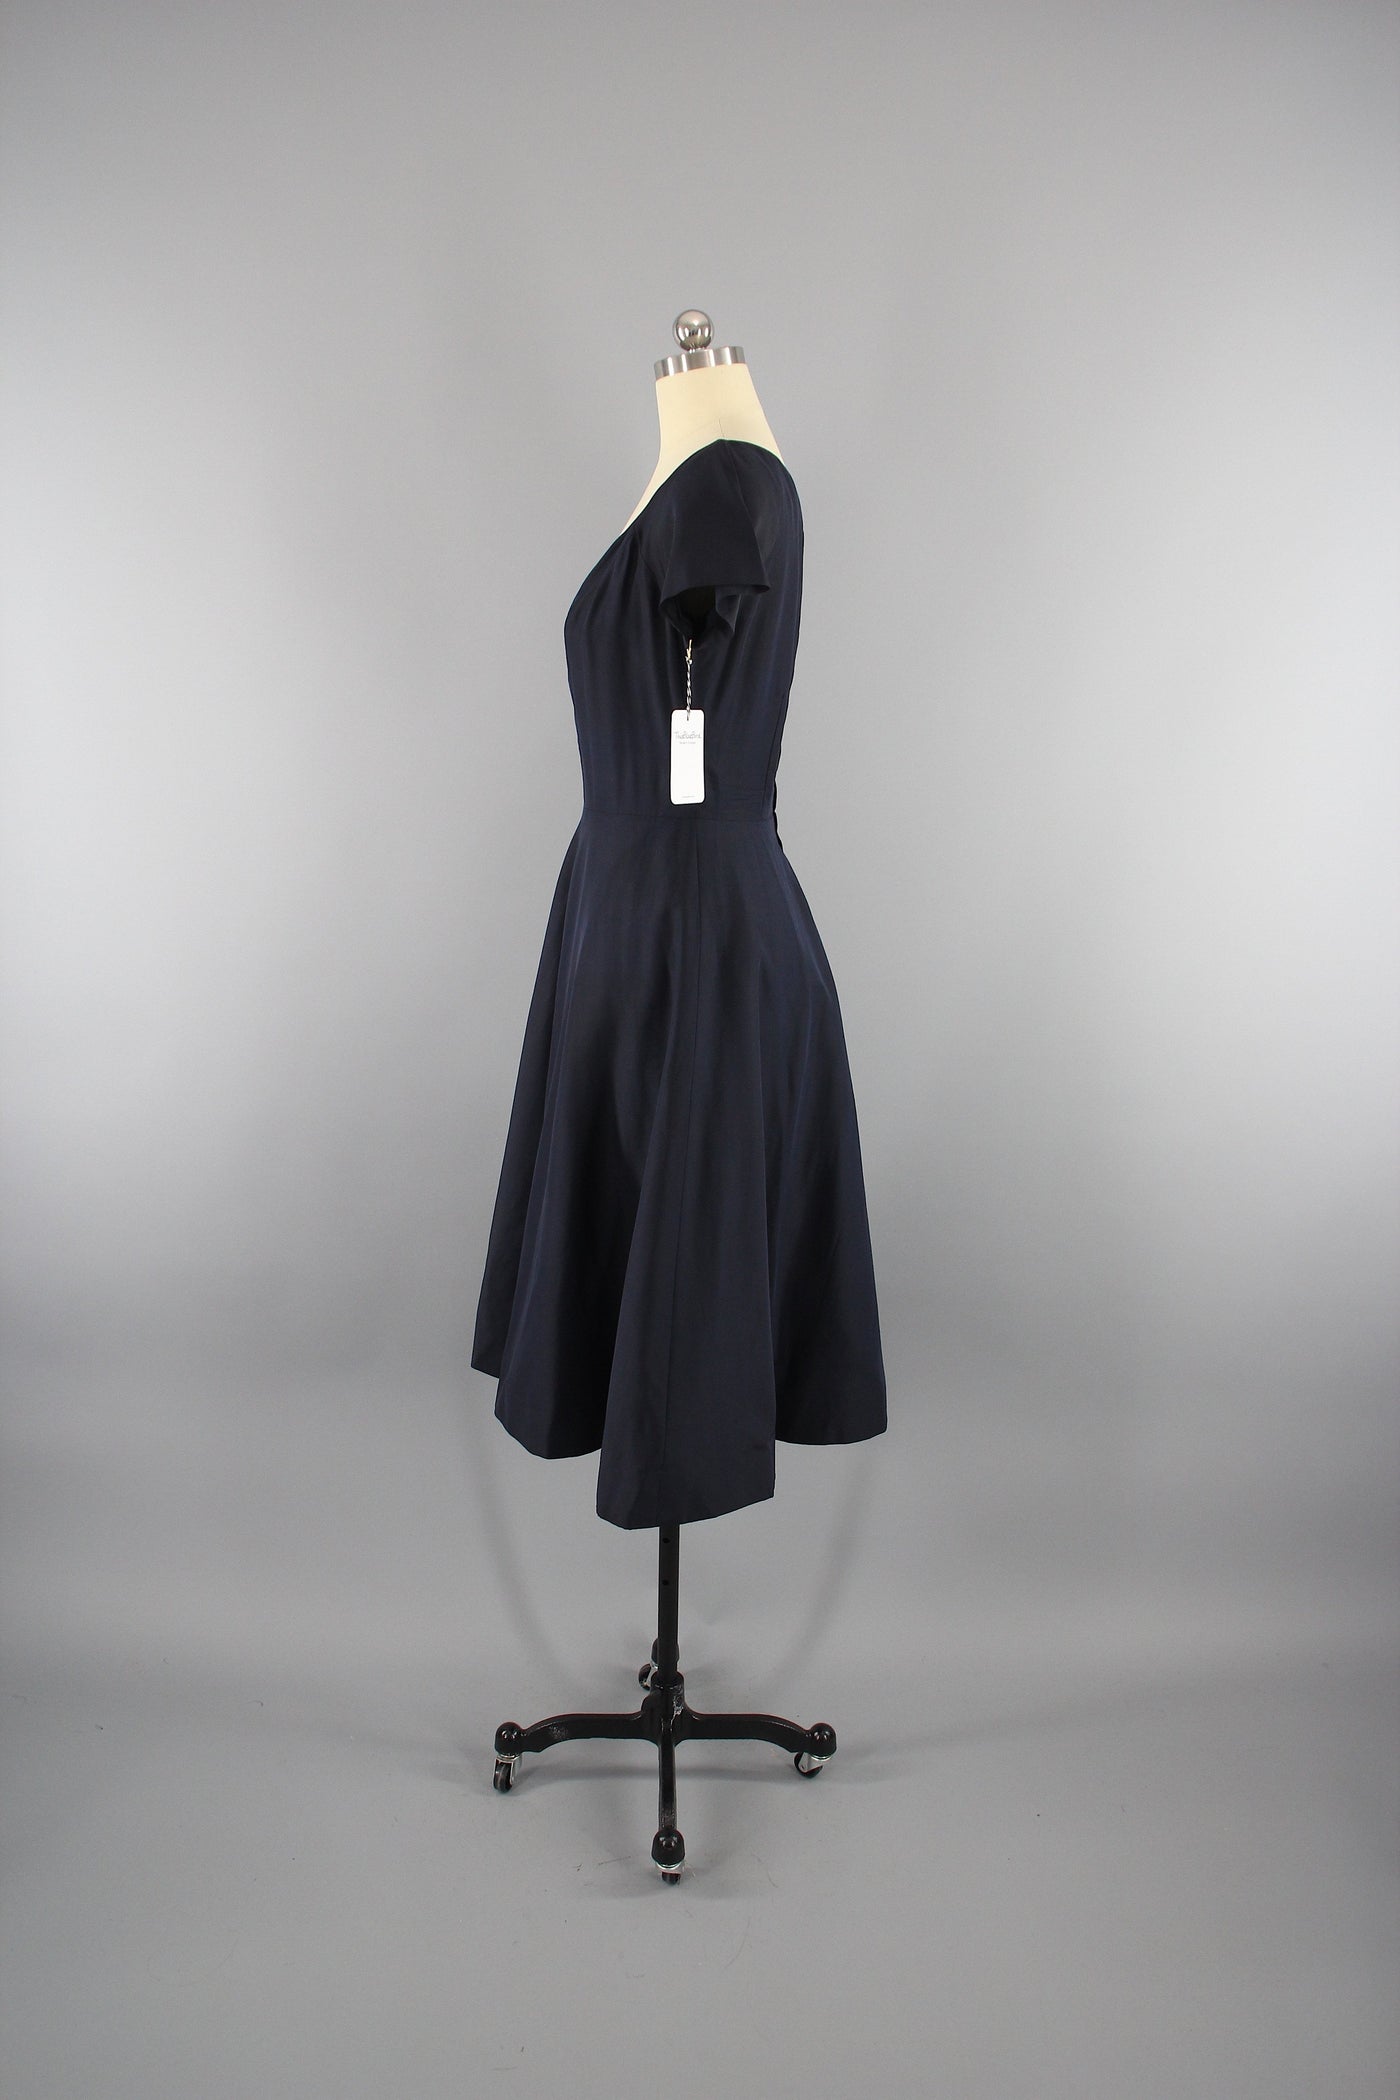 Vintage 1950s New Look Black Cocktail Dress - ThisBlueBird